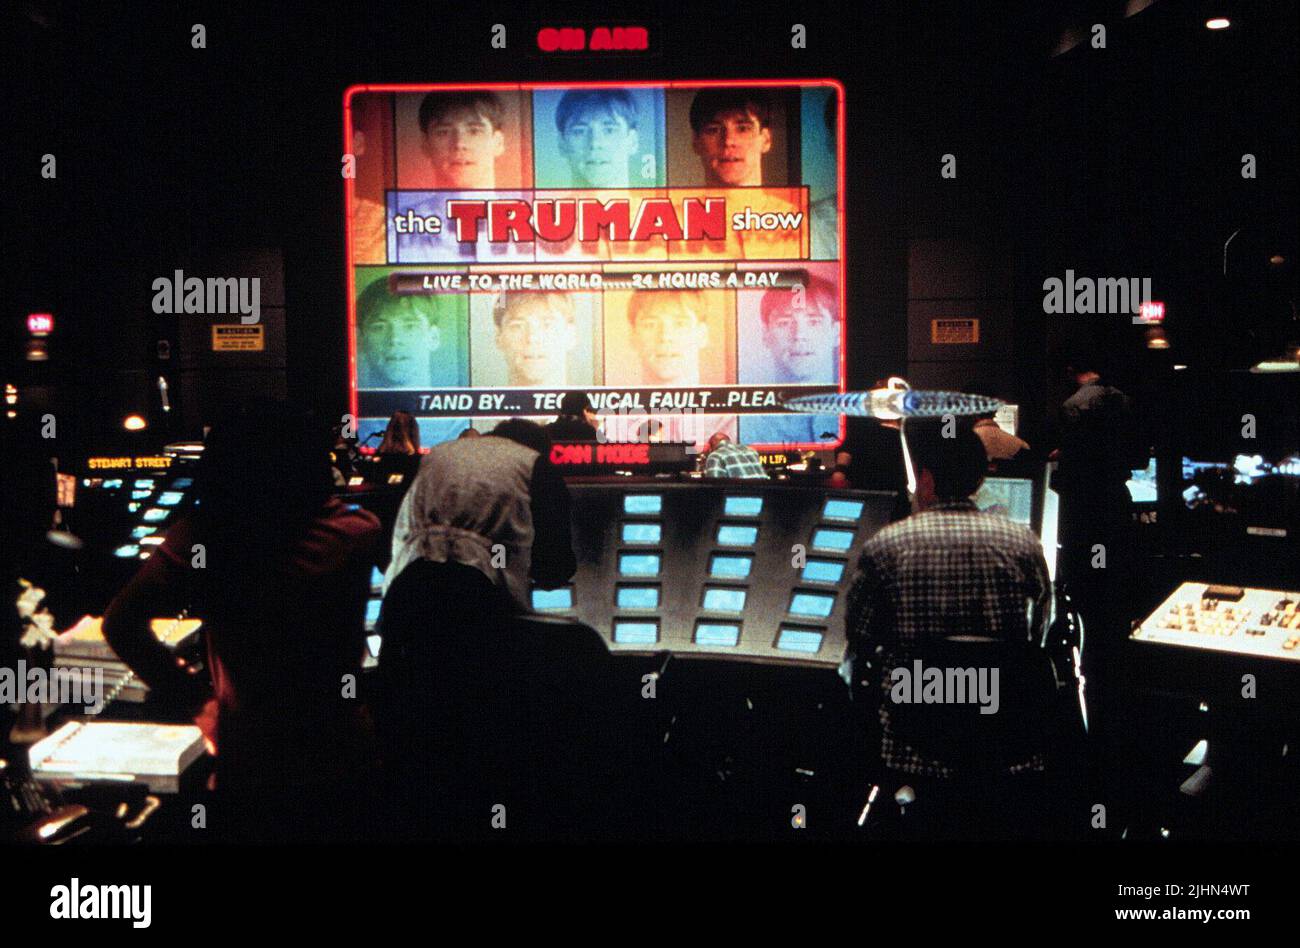 TV SHOW CONTROL ROOM, THE TRUMAN SHOW, 1998 Stock Photo